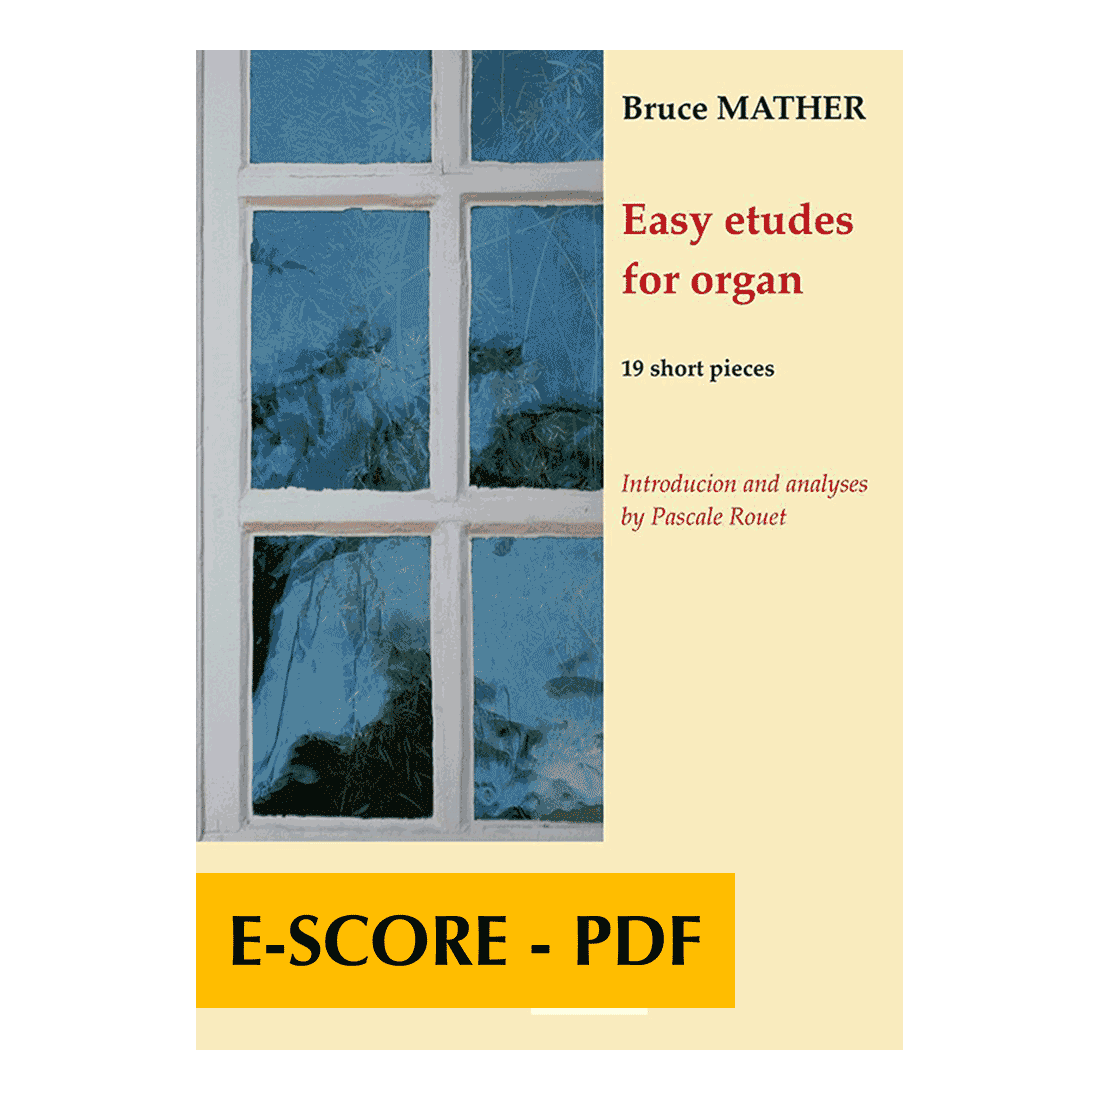 Easy etudes for organ - English version - E-score PDF